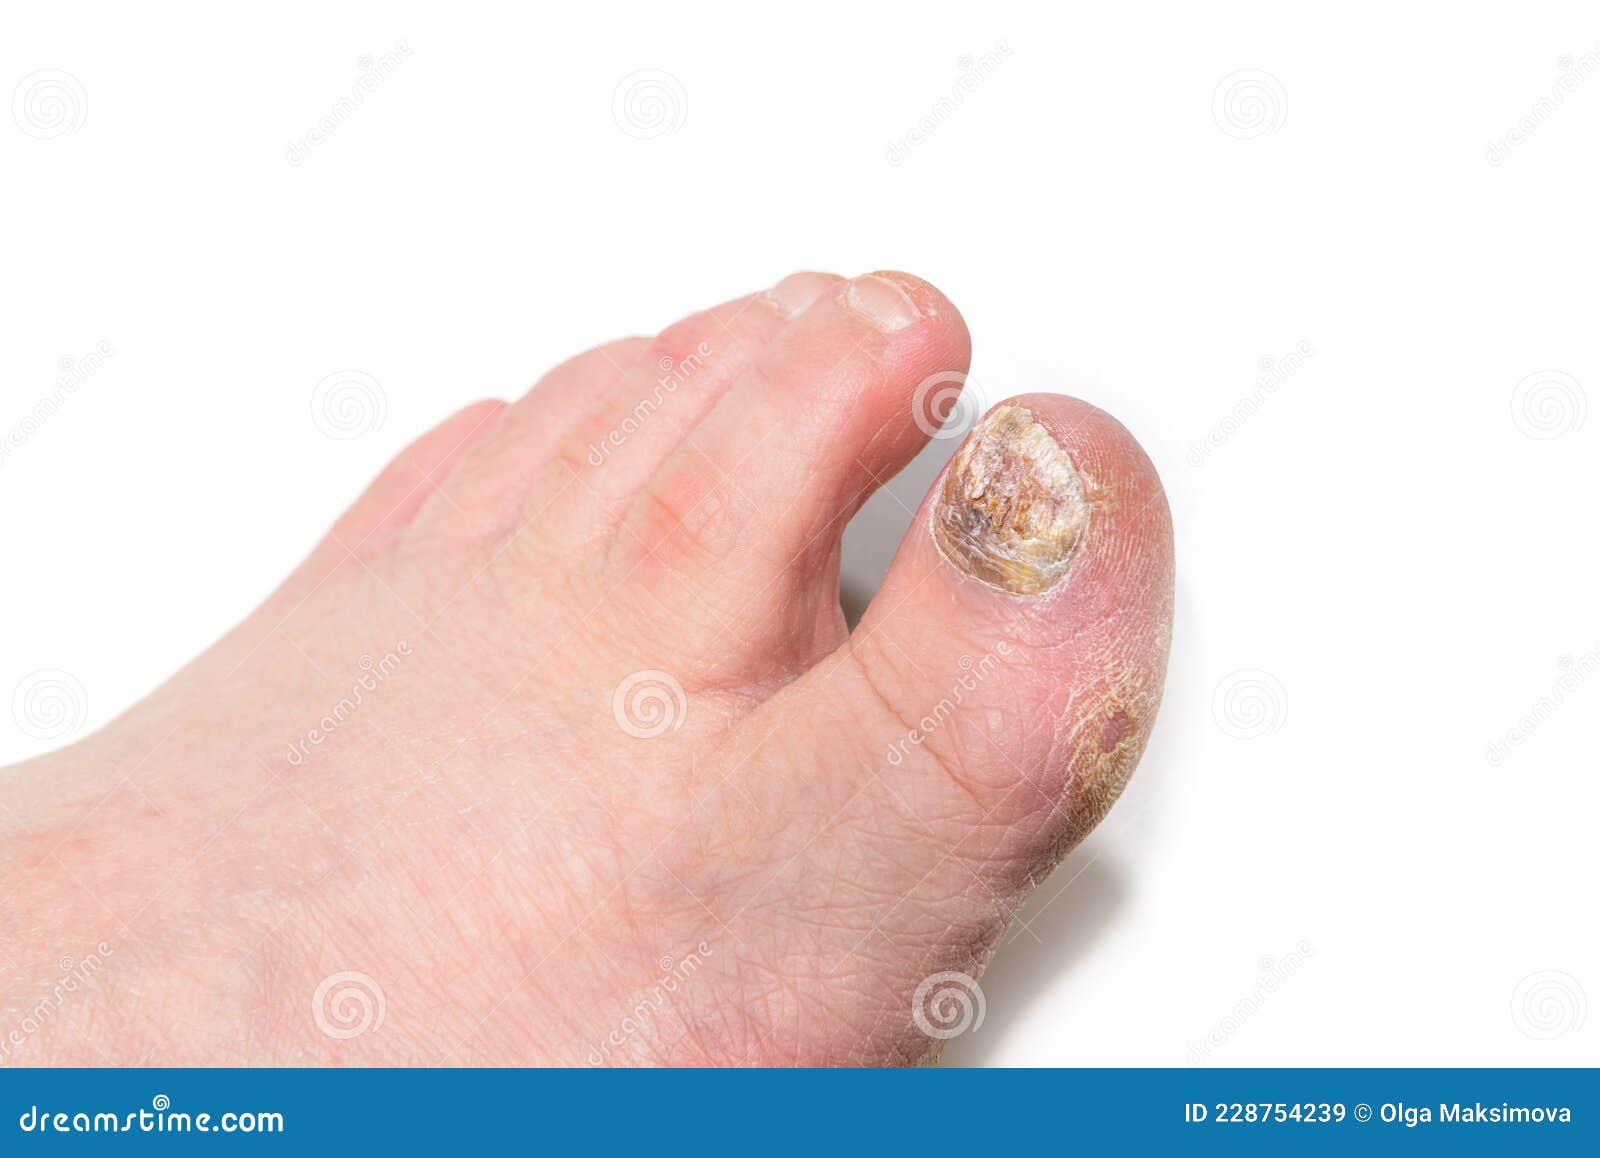 nail onichomicosis nail gombus kezelése)